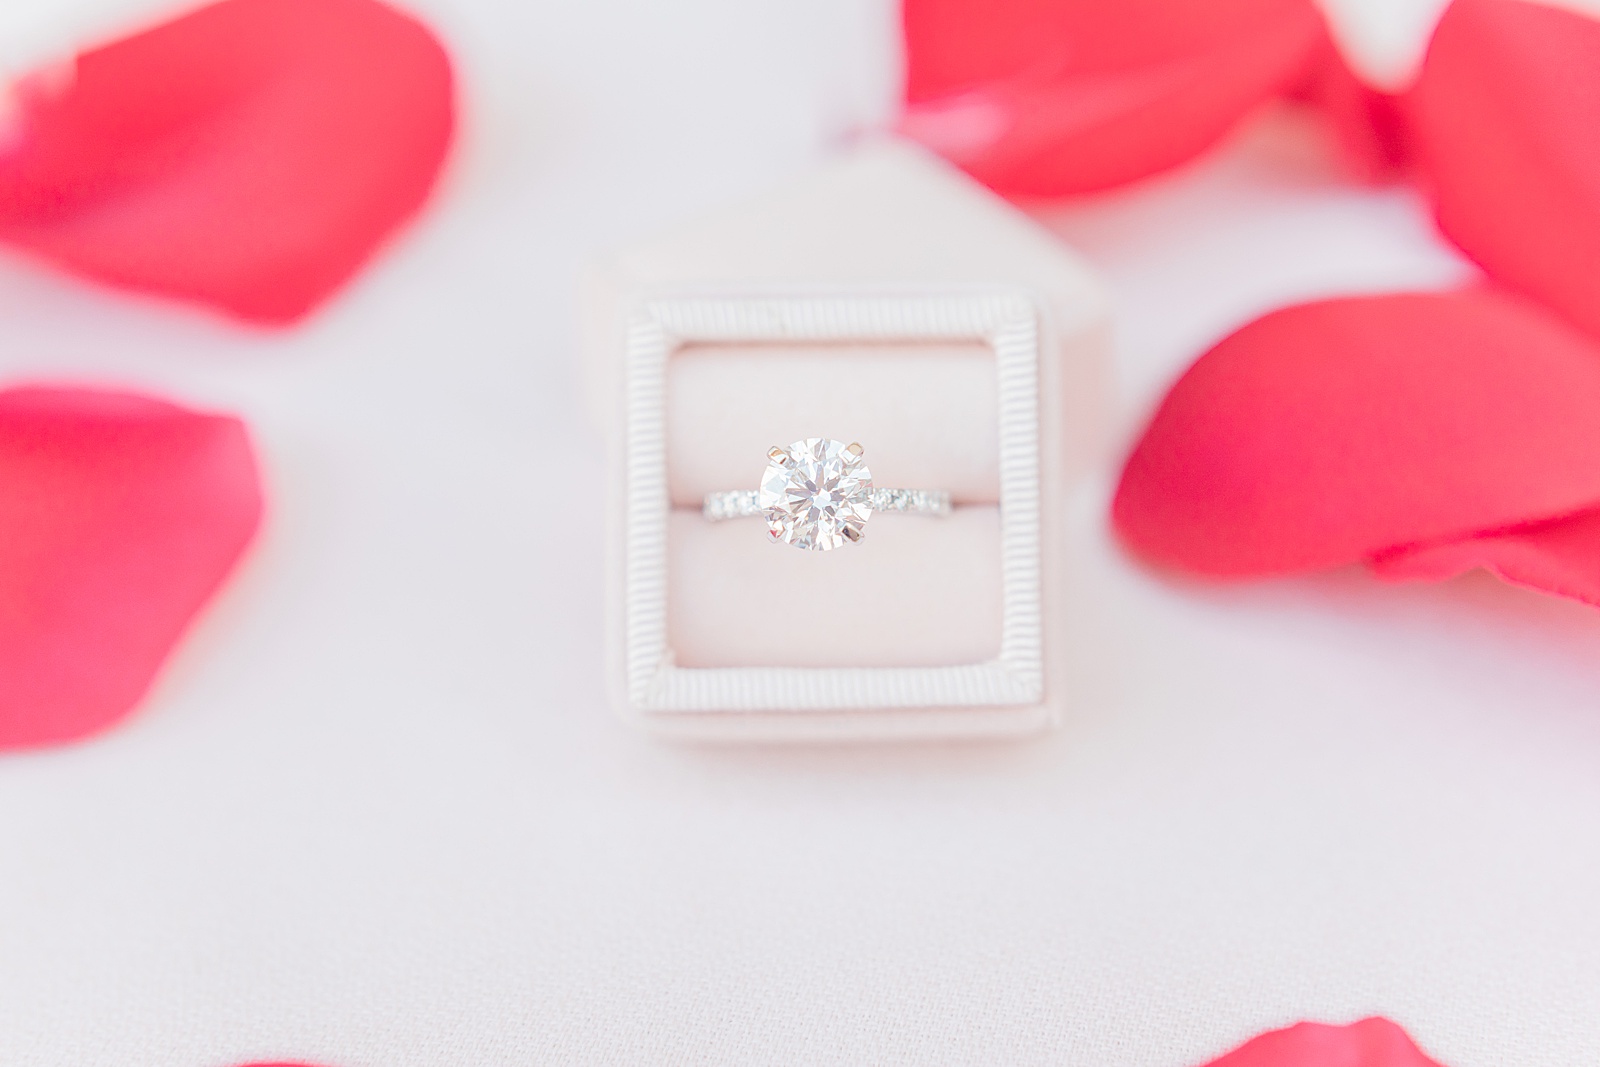 Princess Cut Engagement Ring, San Antonio Rooftop Proposal